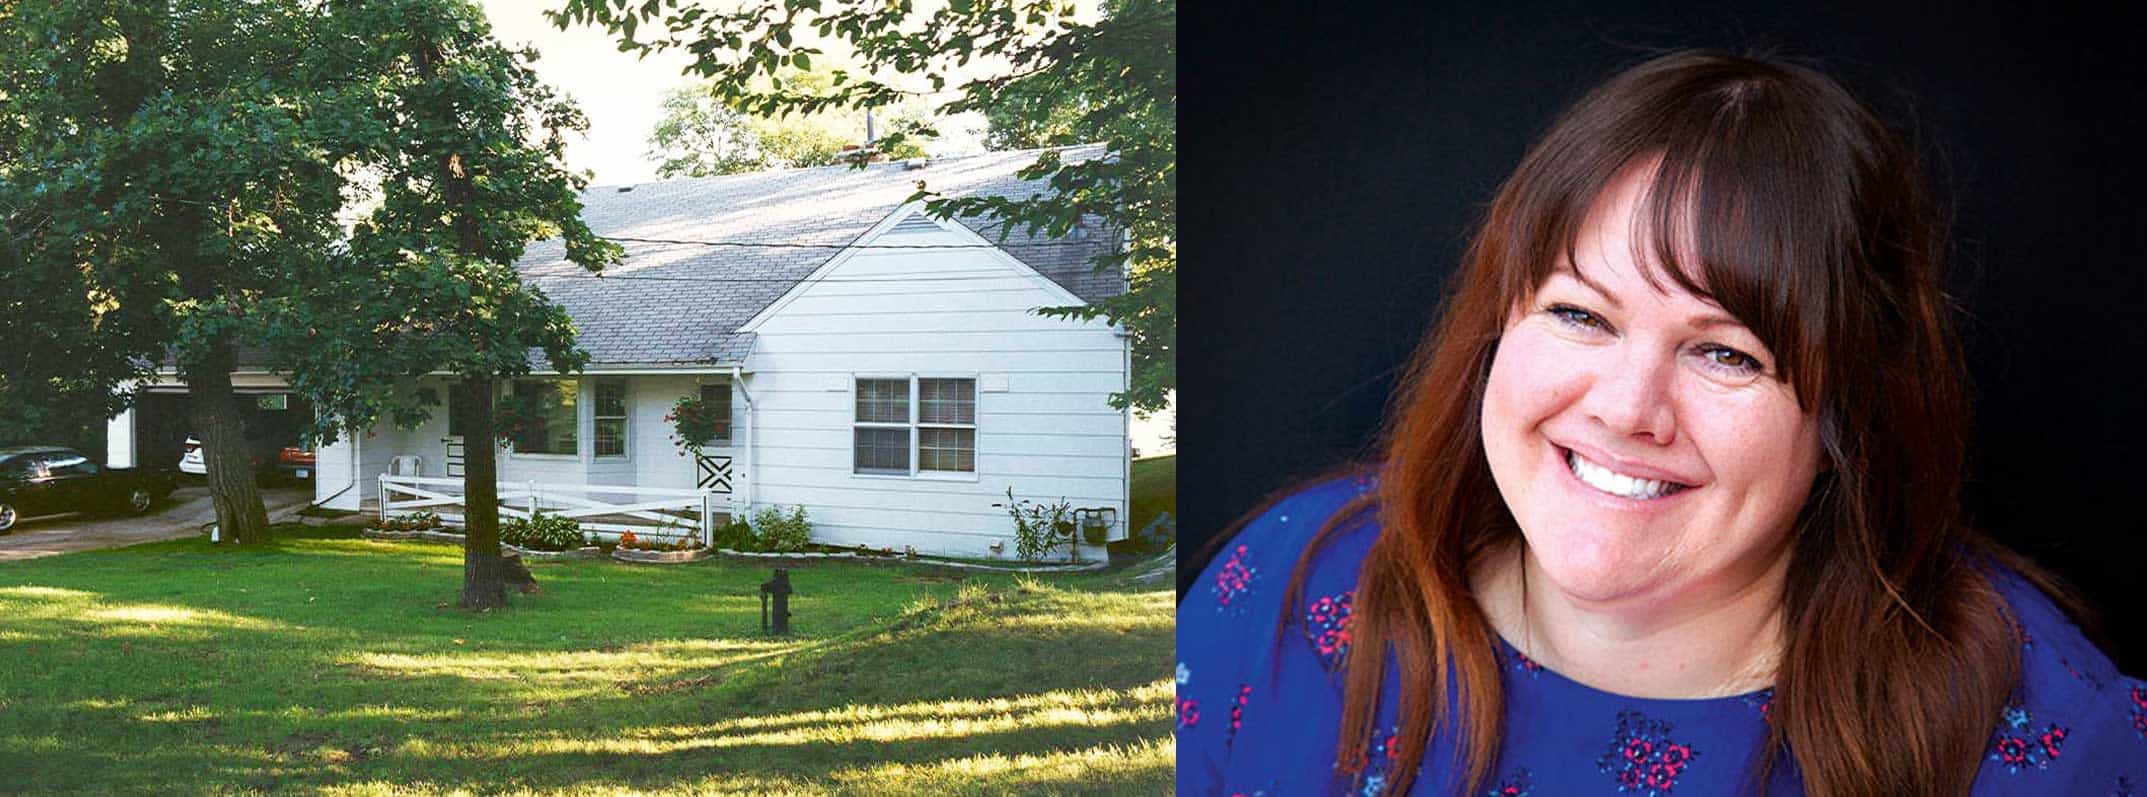 Left: Abby's Lake House in Minnesota. Right: Abby Hetherington.